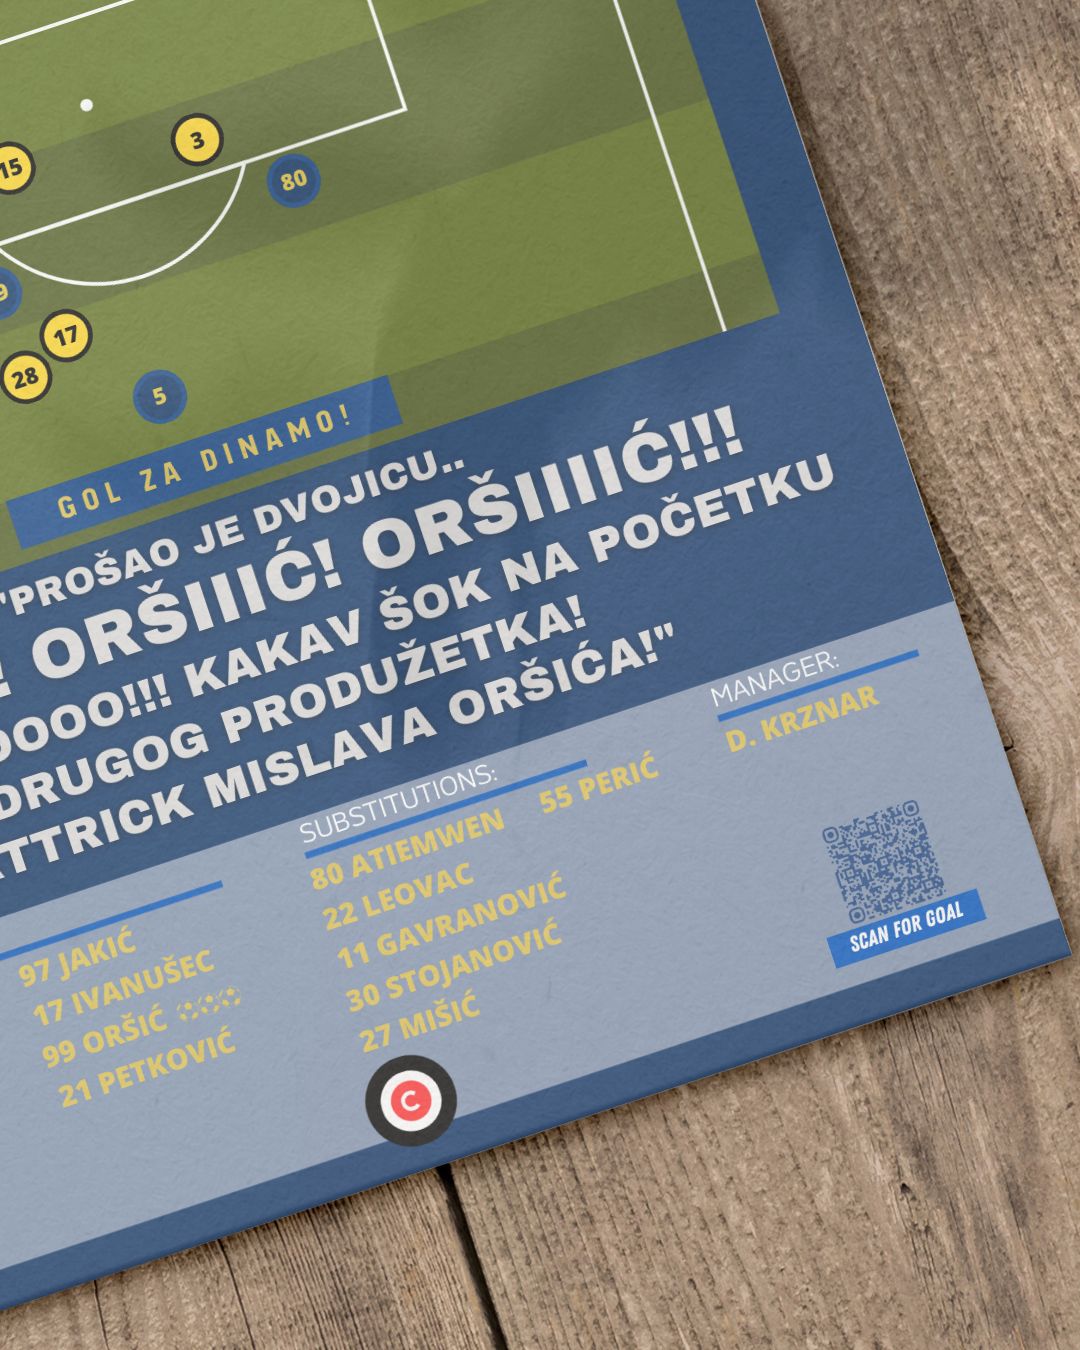 Mislav Oršić vs Tottenham- UEFA Europa League 20/21- Dinamo Zagreb - Premium  from CatenaccioDesigns - Just €14.50! Shop now at CatenaccioDesigns